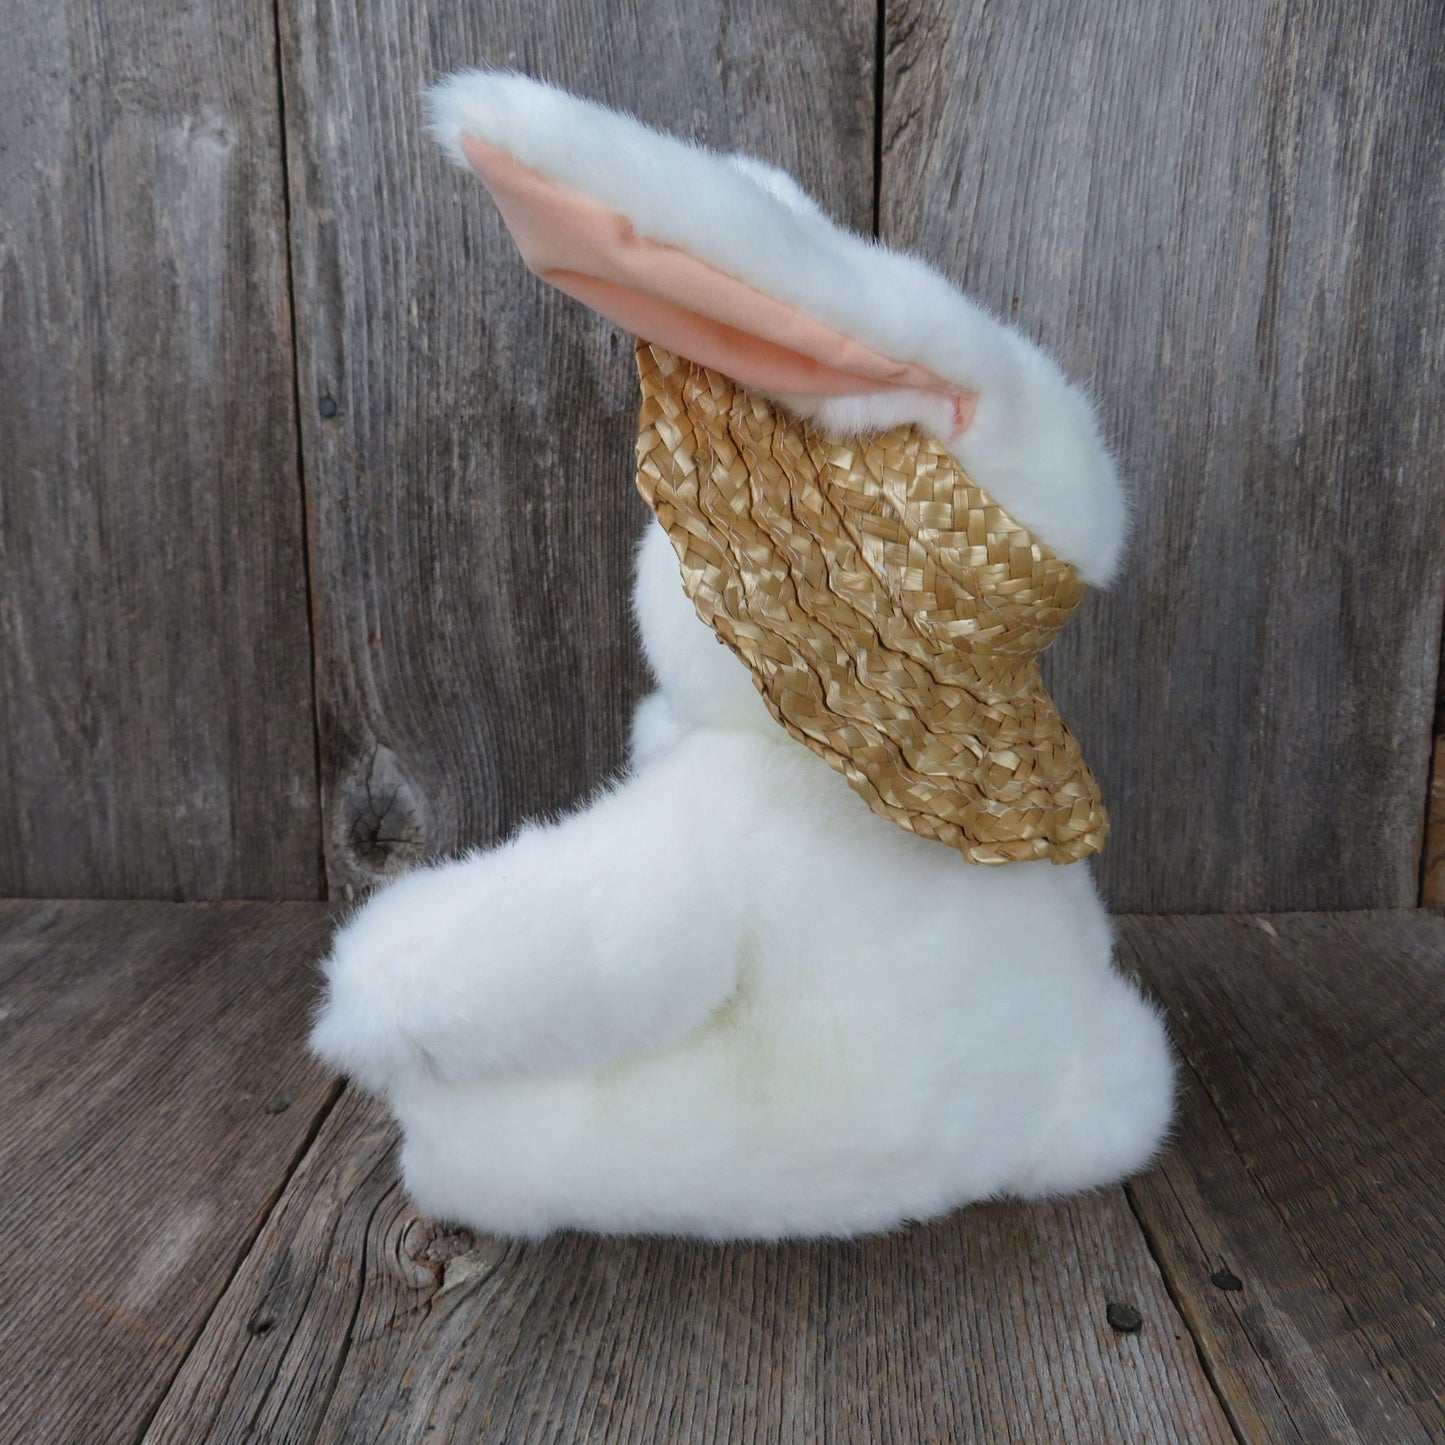 Bunny Plush In Straw Flowered Hat Rabbit White Sitting Pink Flocked Nose Hallmark Stuffed Animal Easter